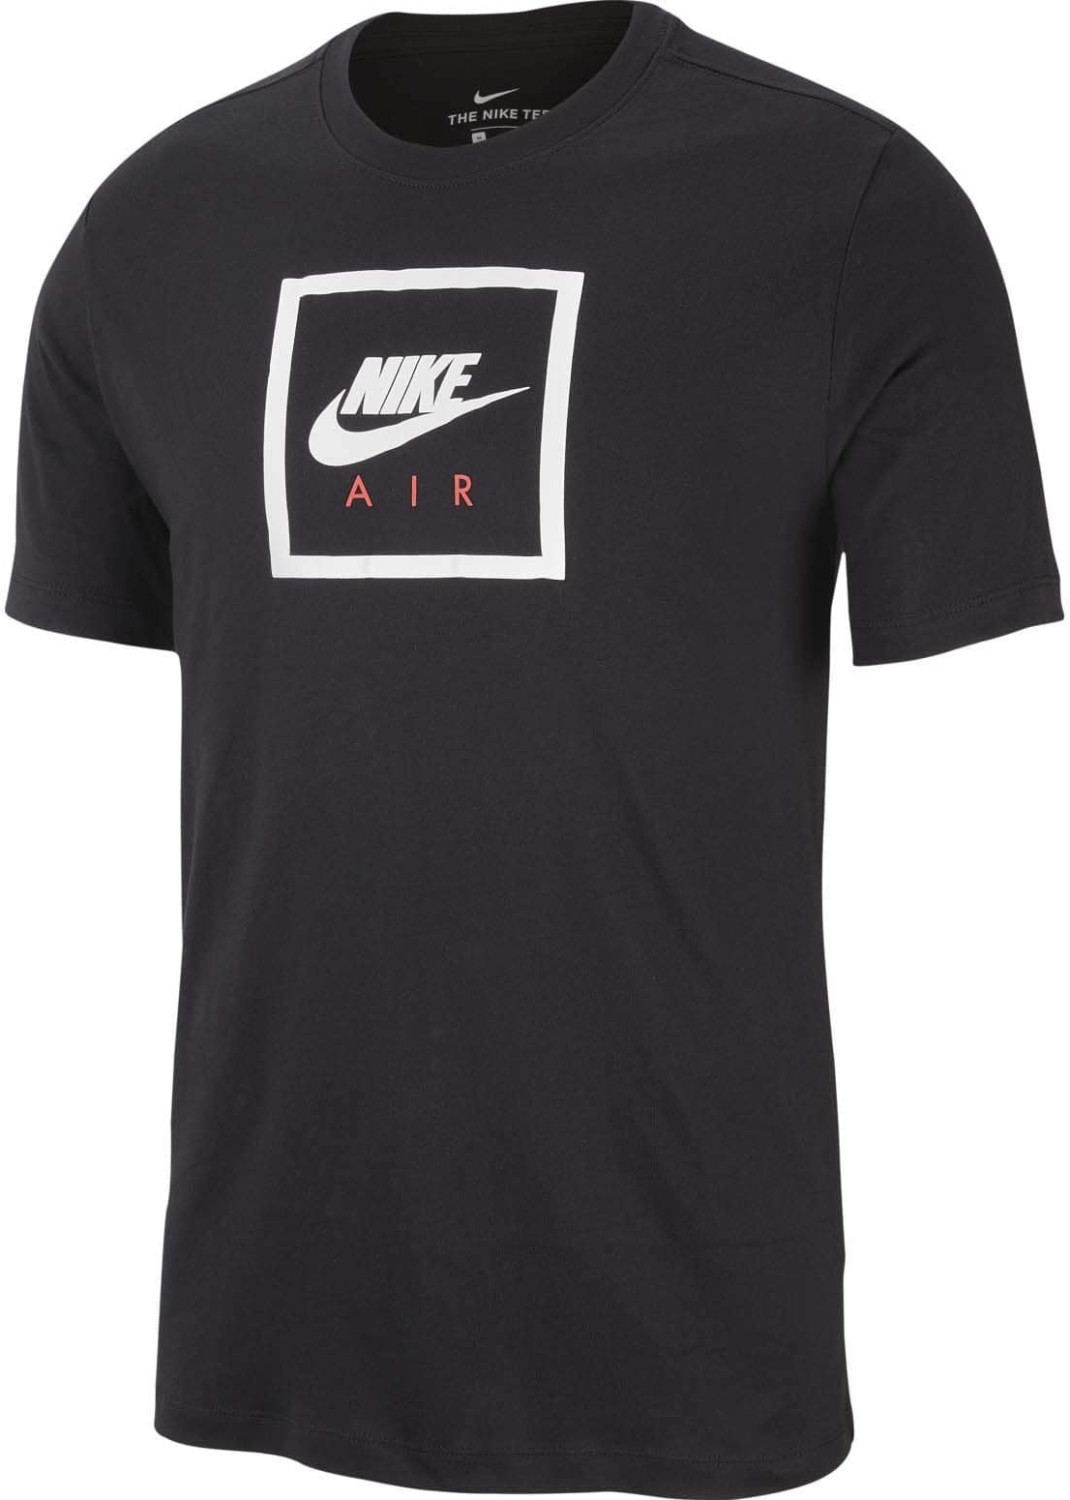 Nike NSW Air 2 Shirt black/white